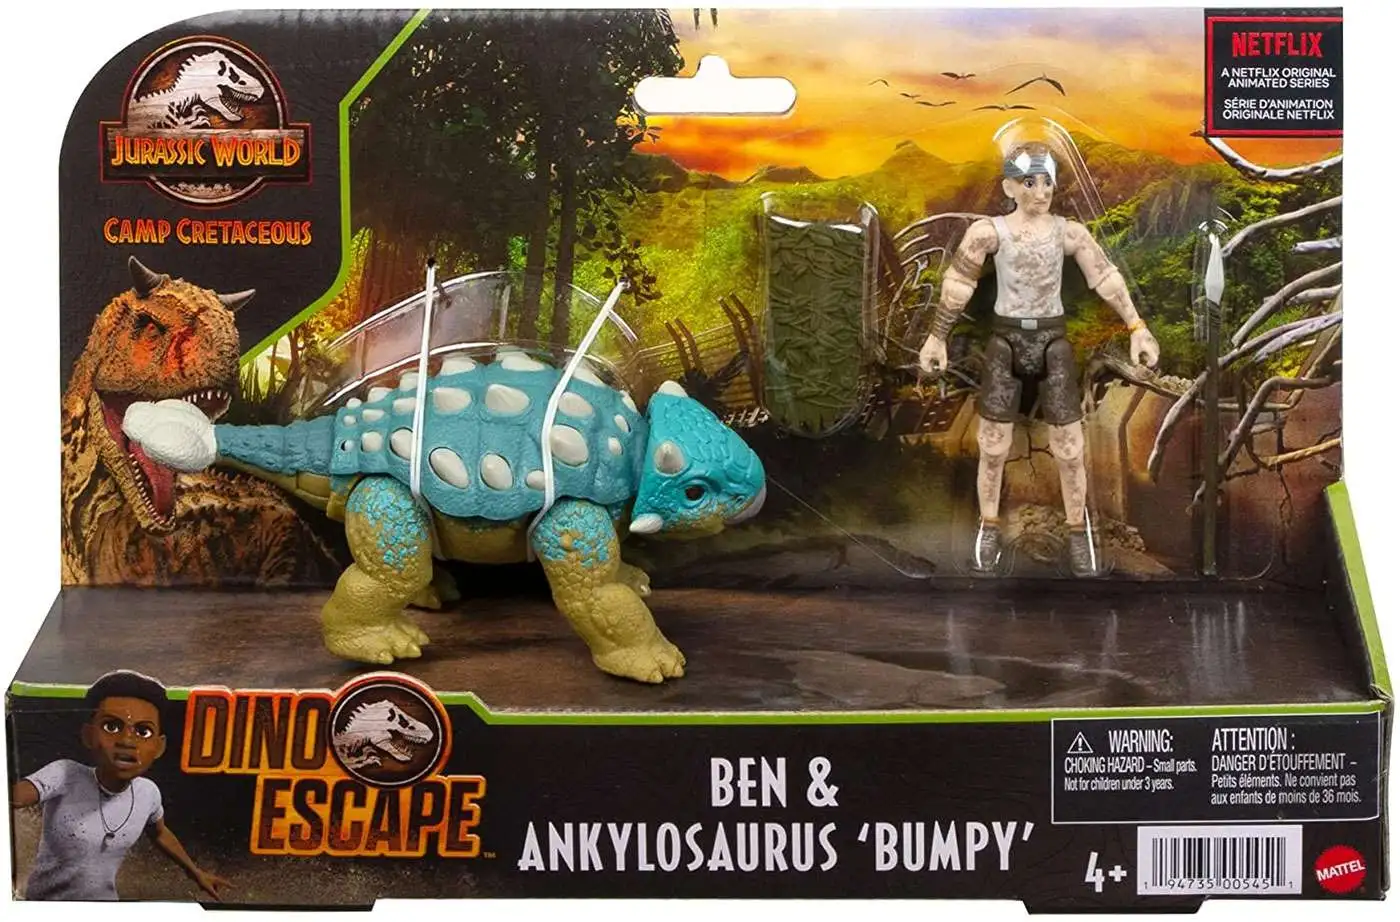 Jurassic World Camp Cretaceous Snap Squad Mosasaurus Mini Figure Netflix  Version Mattel Toys - ToyWiz